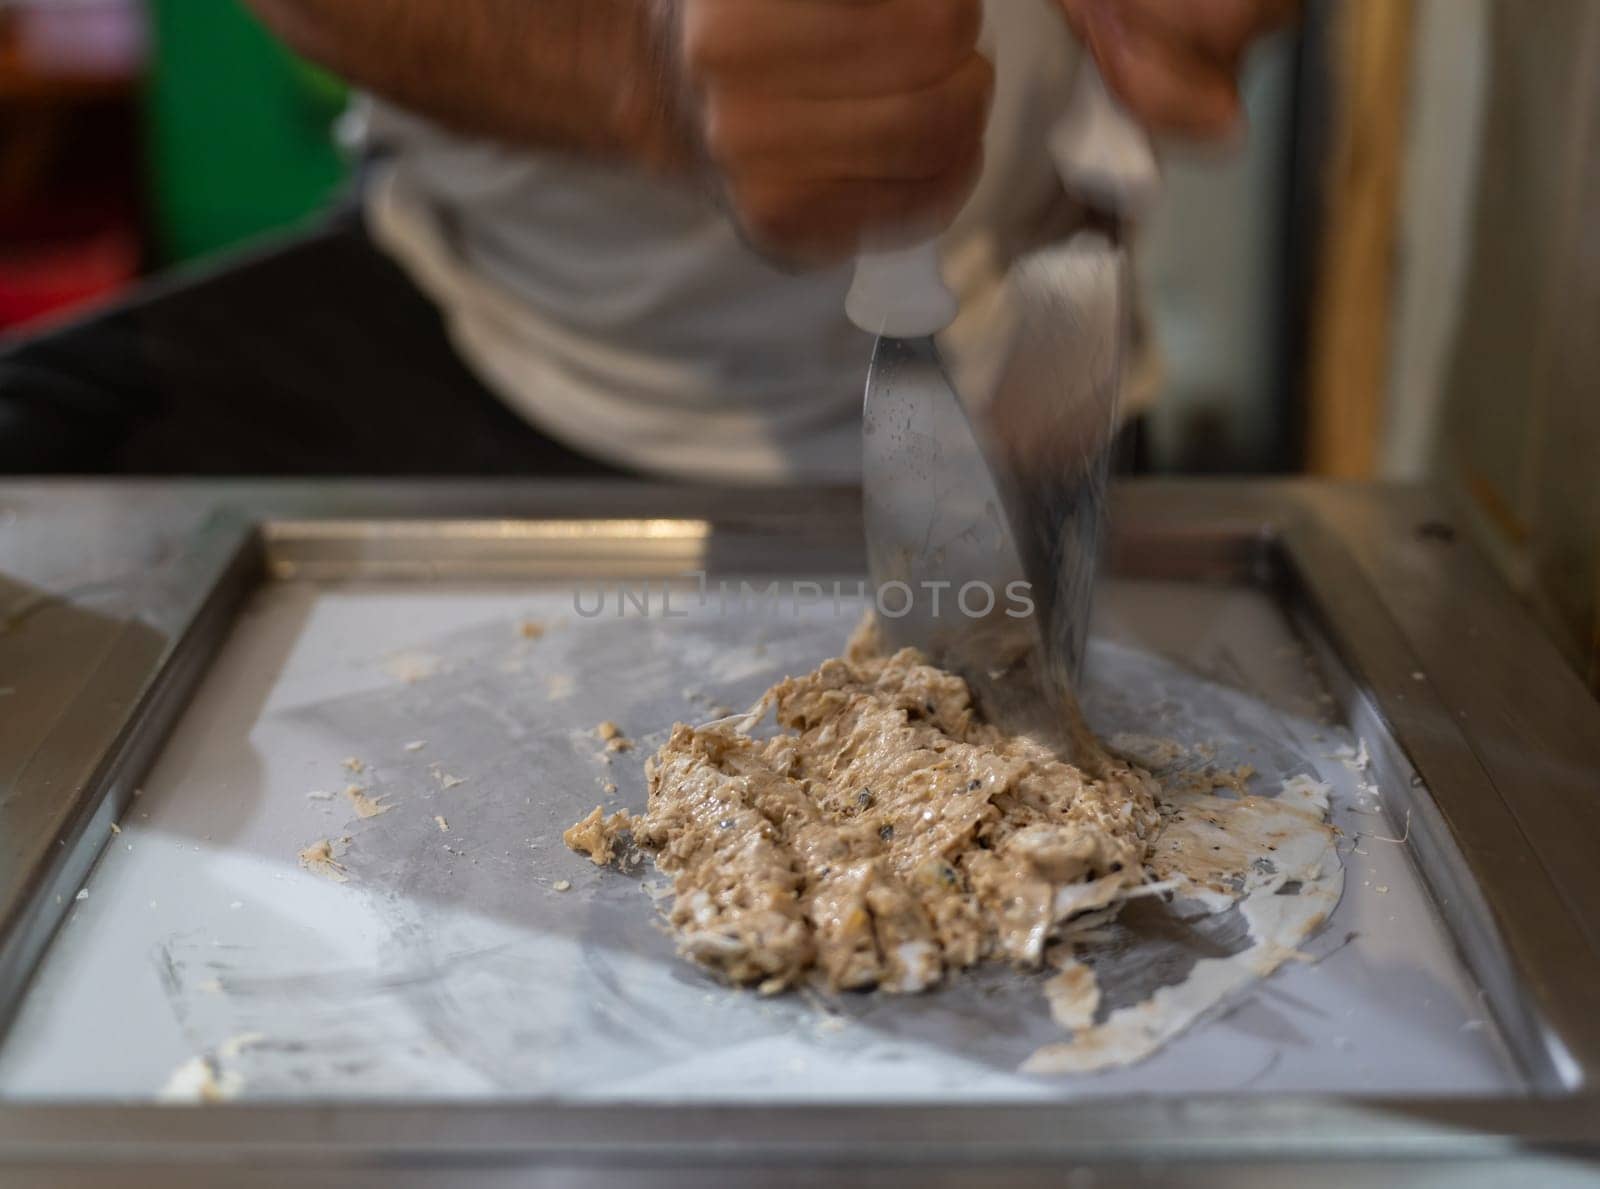 Artisan Ice Cream Expert Making Rolled Ice Cream Delicacy by FerradalFCG